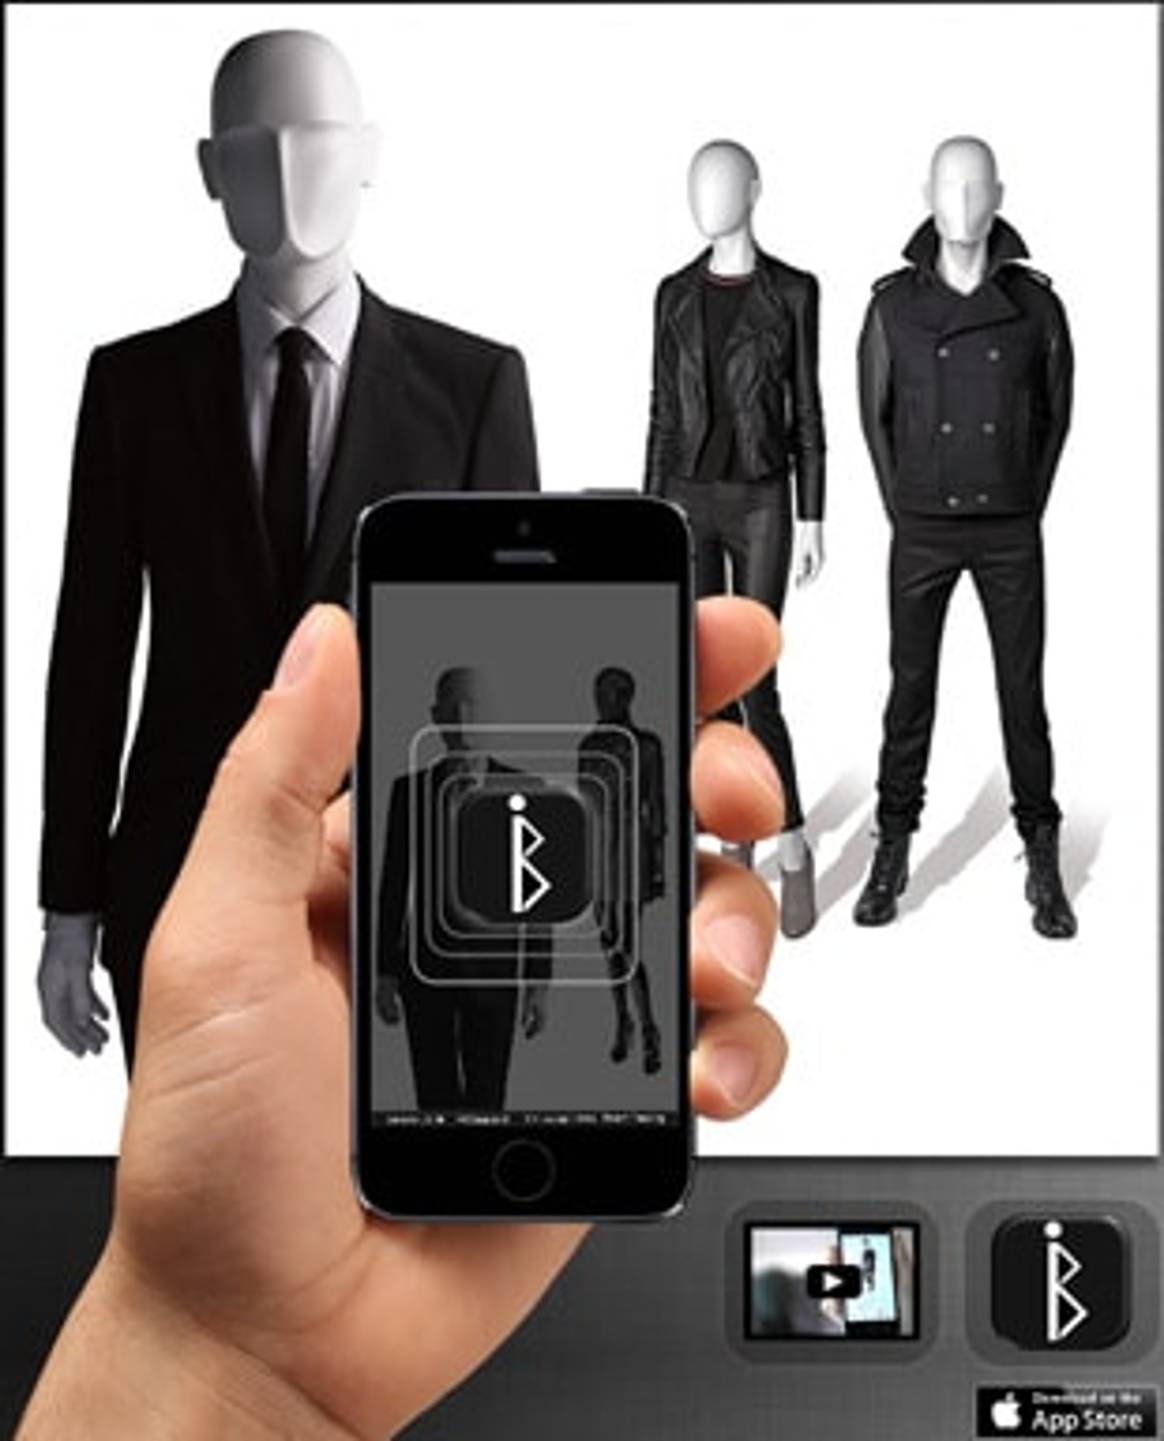 High-tech mannequins 'talk' to shoppers via mobile app